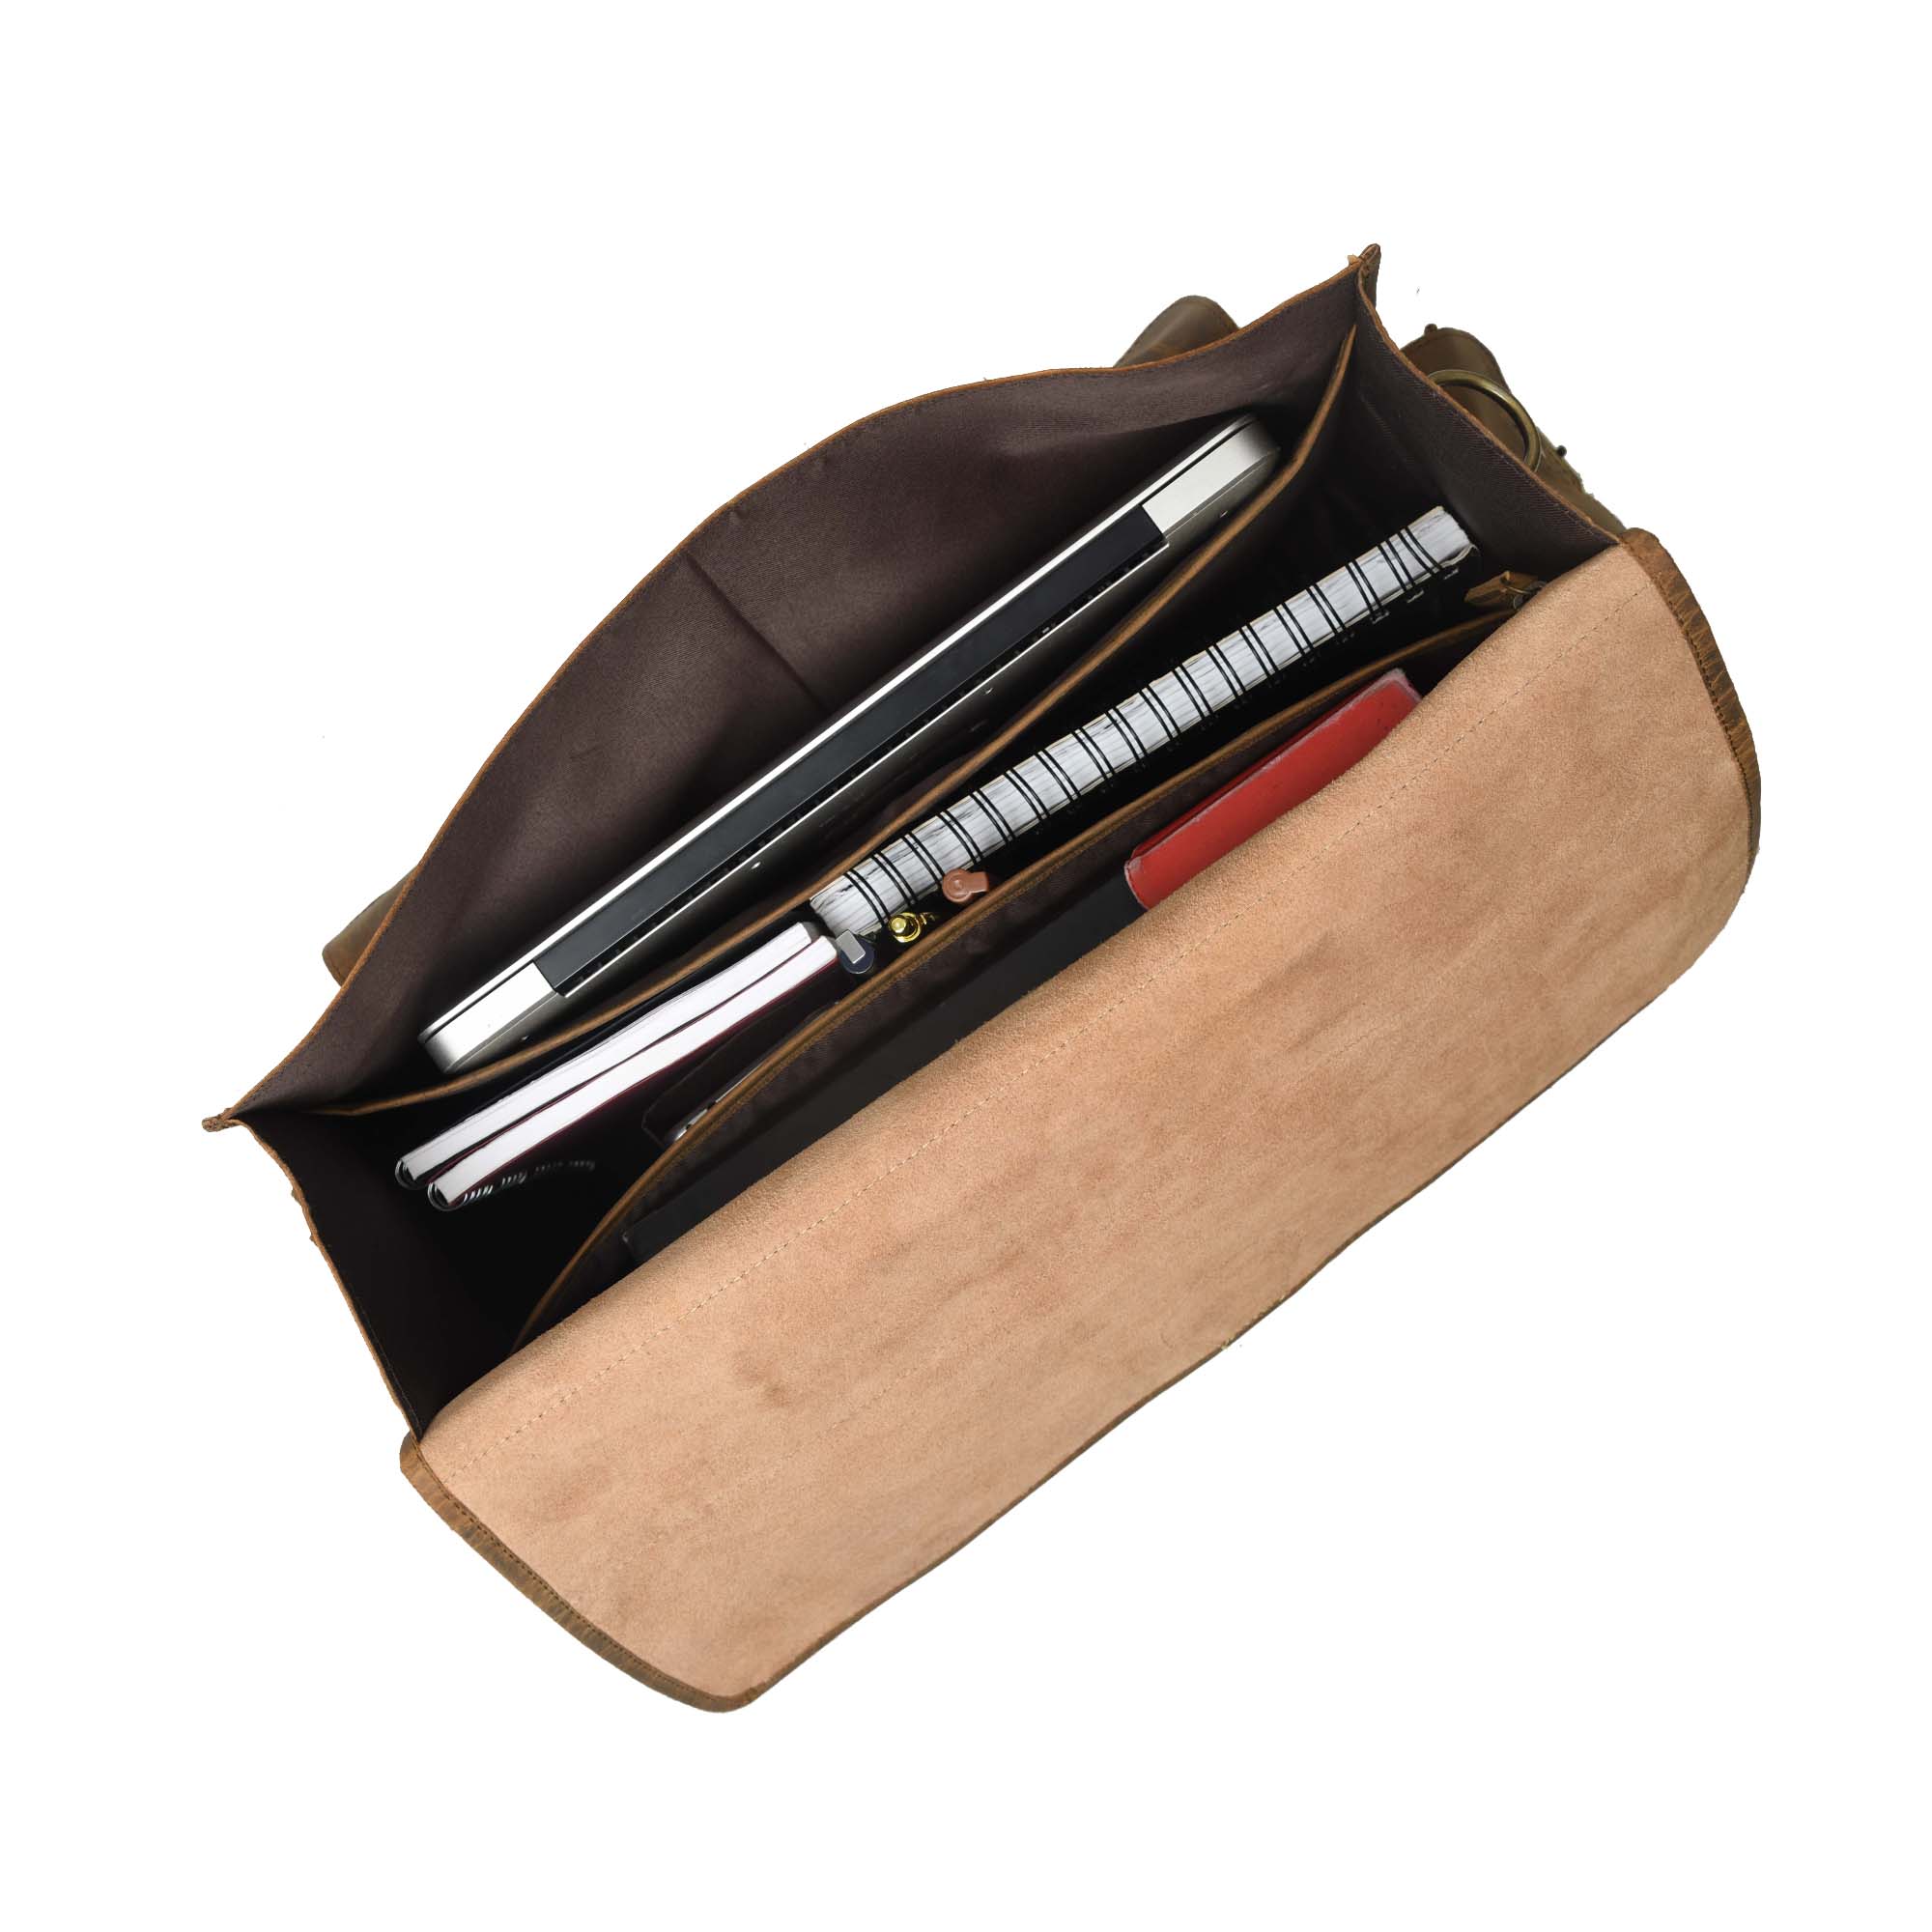 CraftShades- 16 Inch buffalo leather Messenger laptop bag| 100% Genuine ...